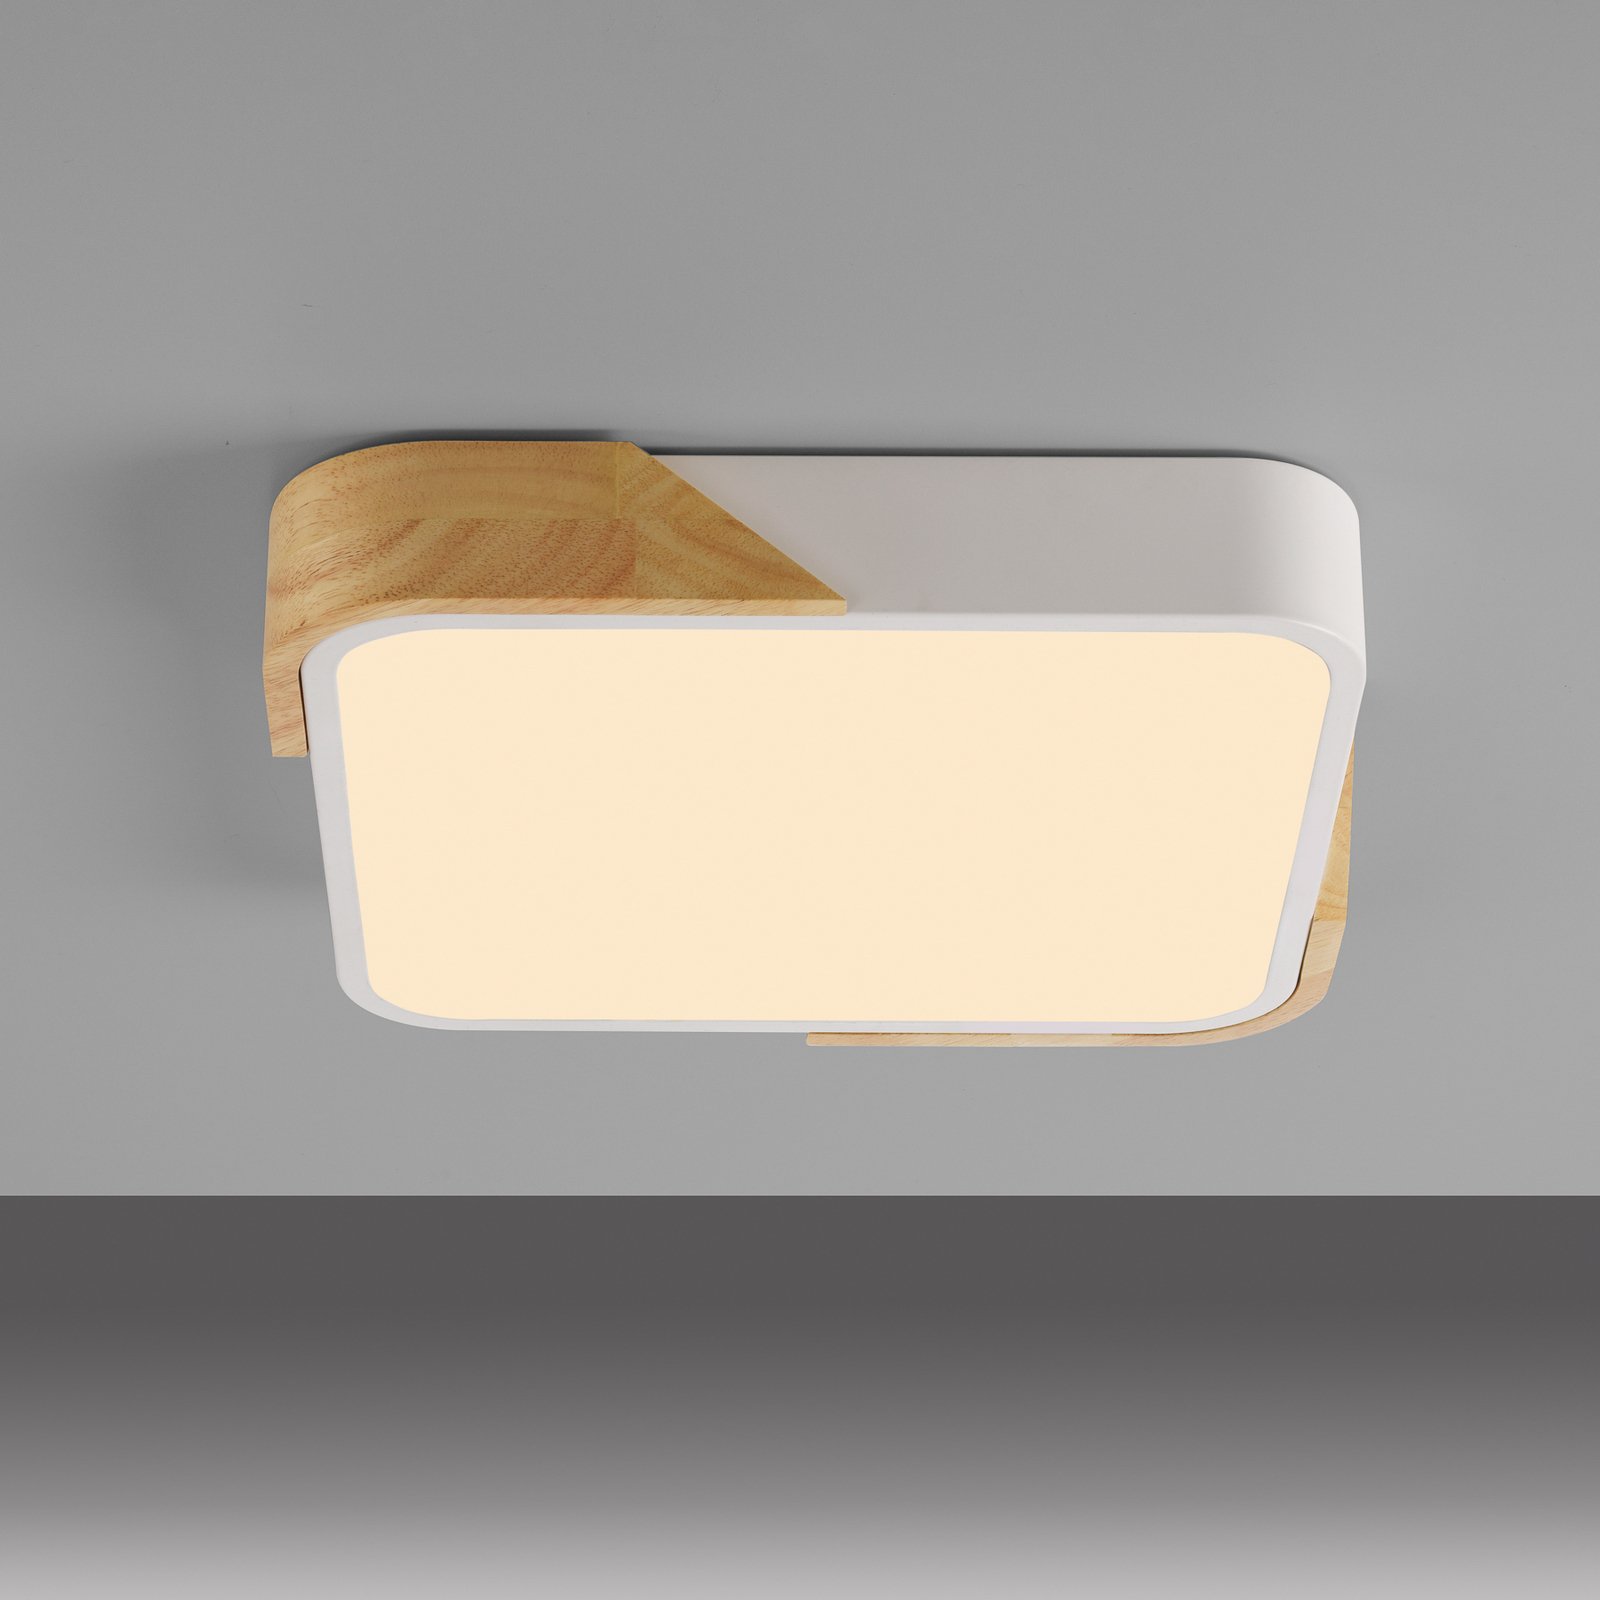 JUST LIGHT. LED-Deckenleuchte Bila, weiß, 32x32 cm, Holz